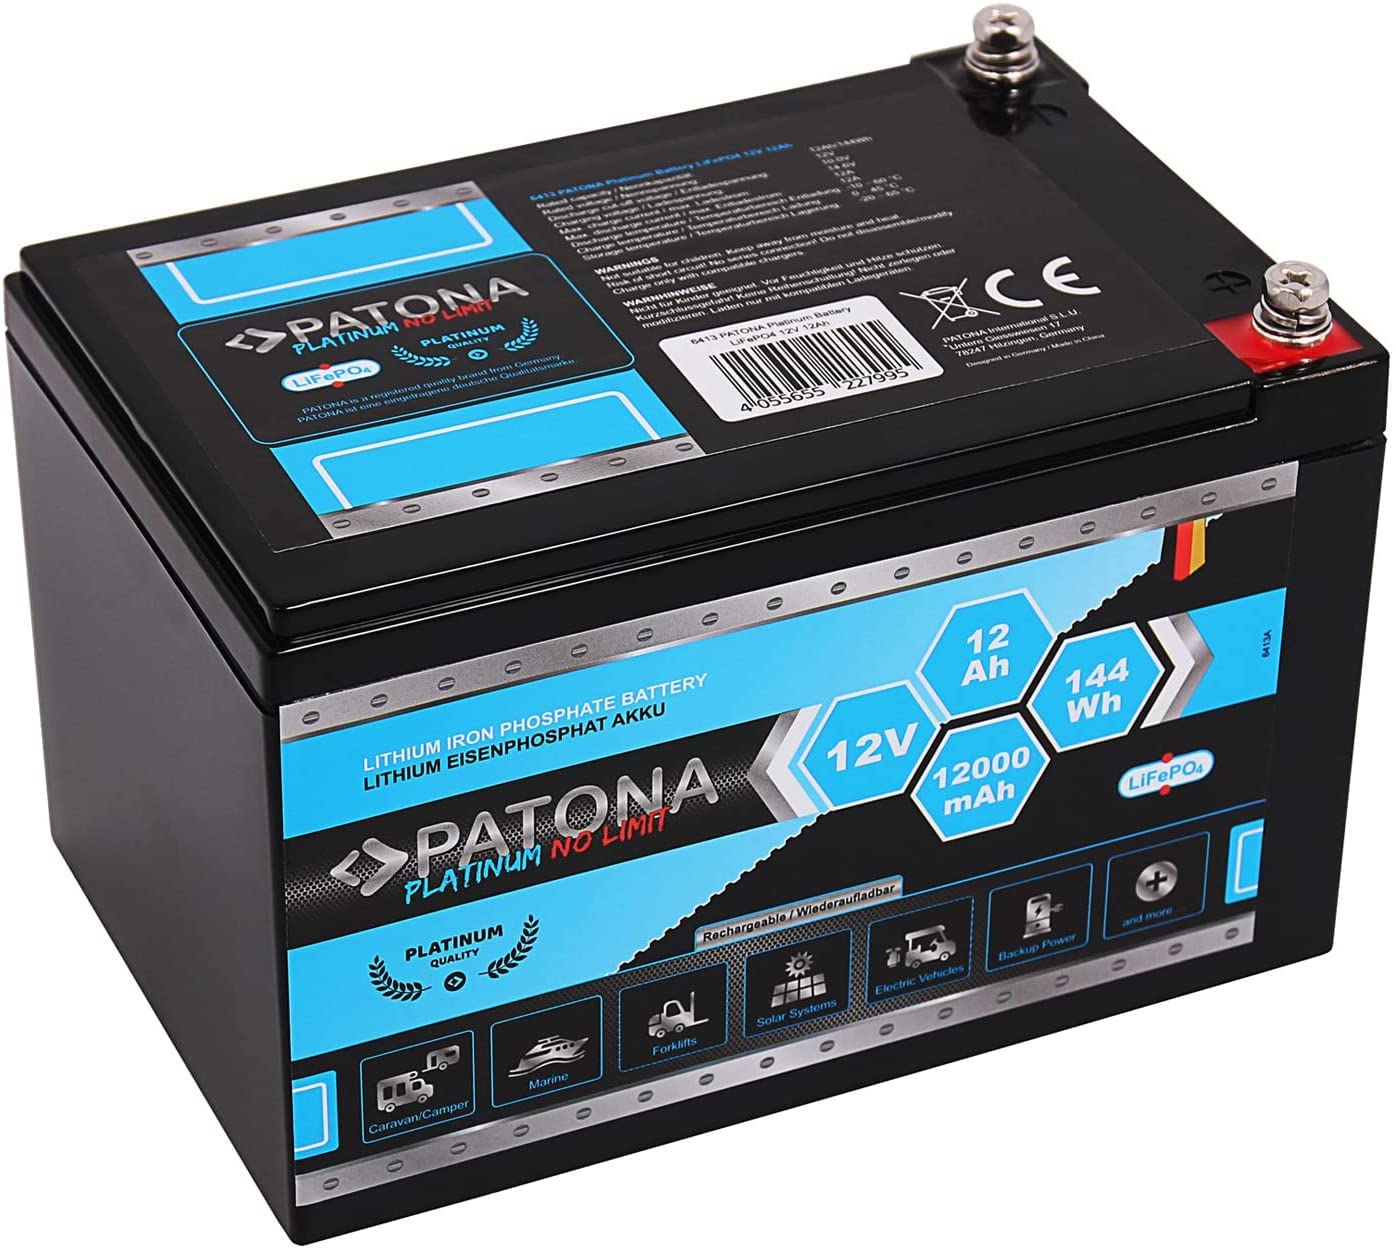 PATONA Platinum LiFePO4 Akku 12V 12Ah (144Wh) Versorgungsbatterie Traktionsbatterie mit Batterie Management System (BMS) von PATONA